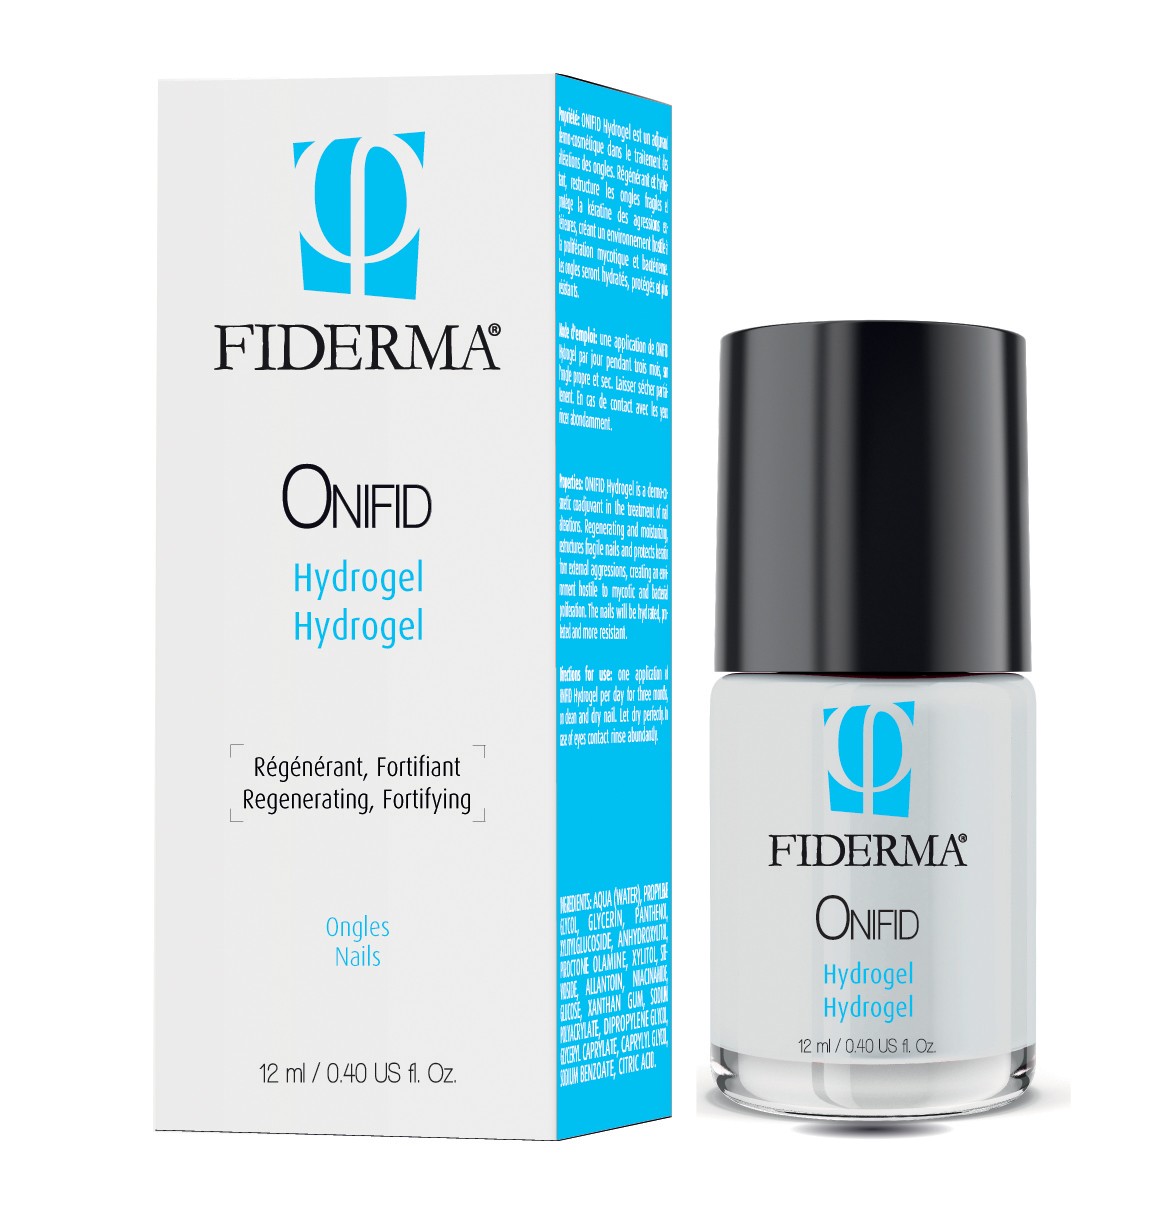 Fiderma Onifid Hydrogel gel za poškodbe in obolenja nohtov, 12 ml